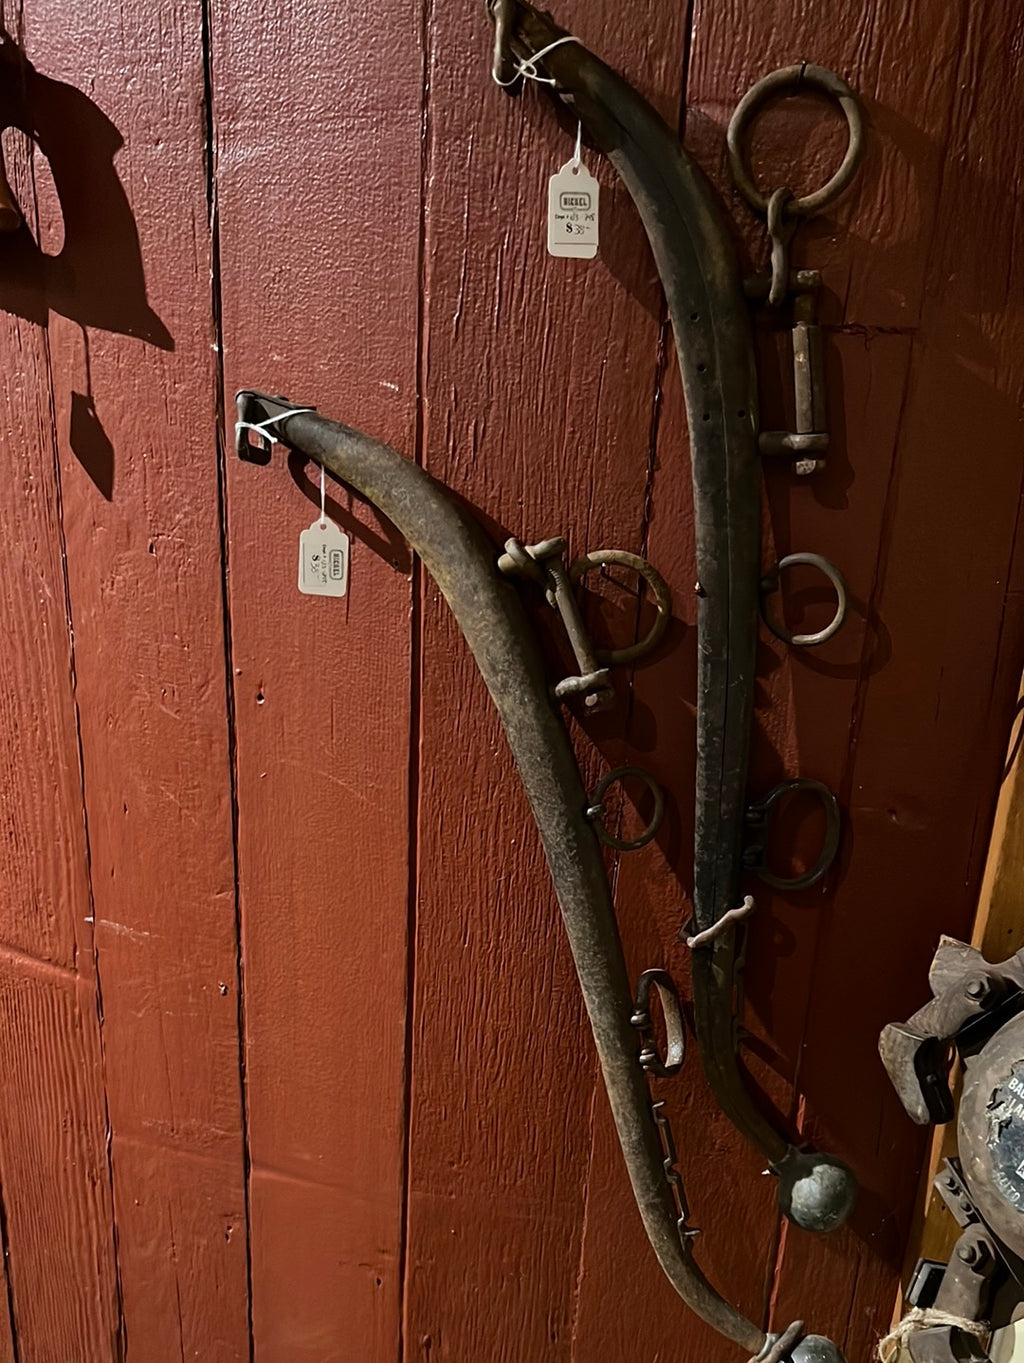 Vintage hay Hooks – The Nickel Barn